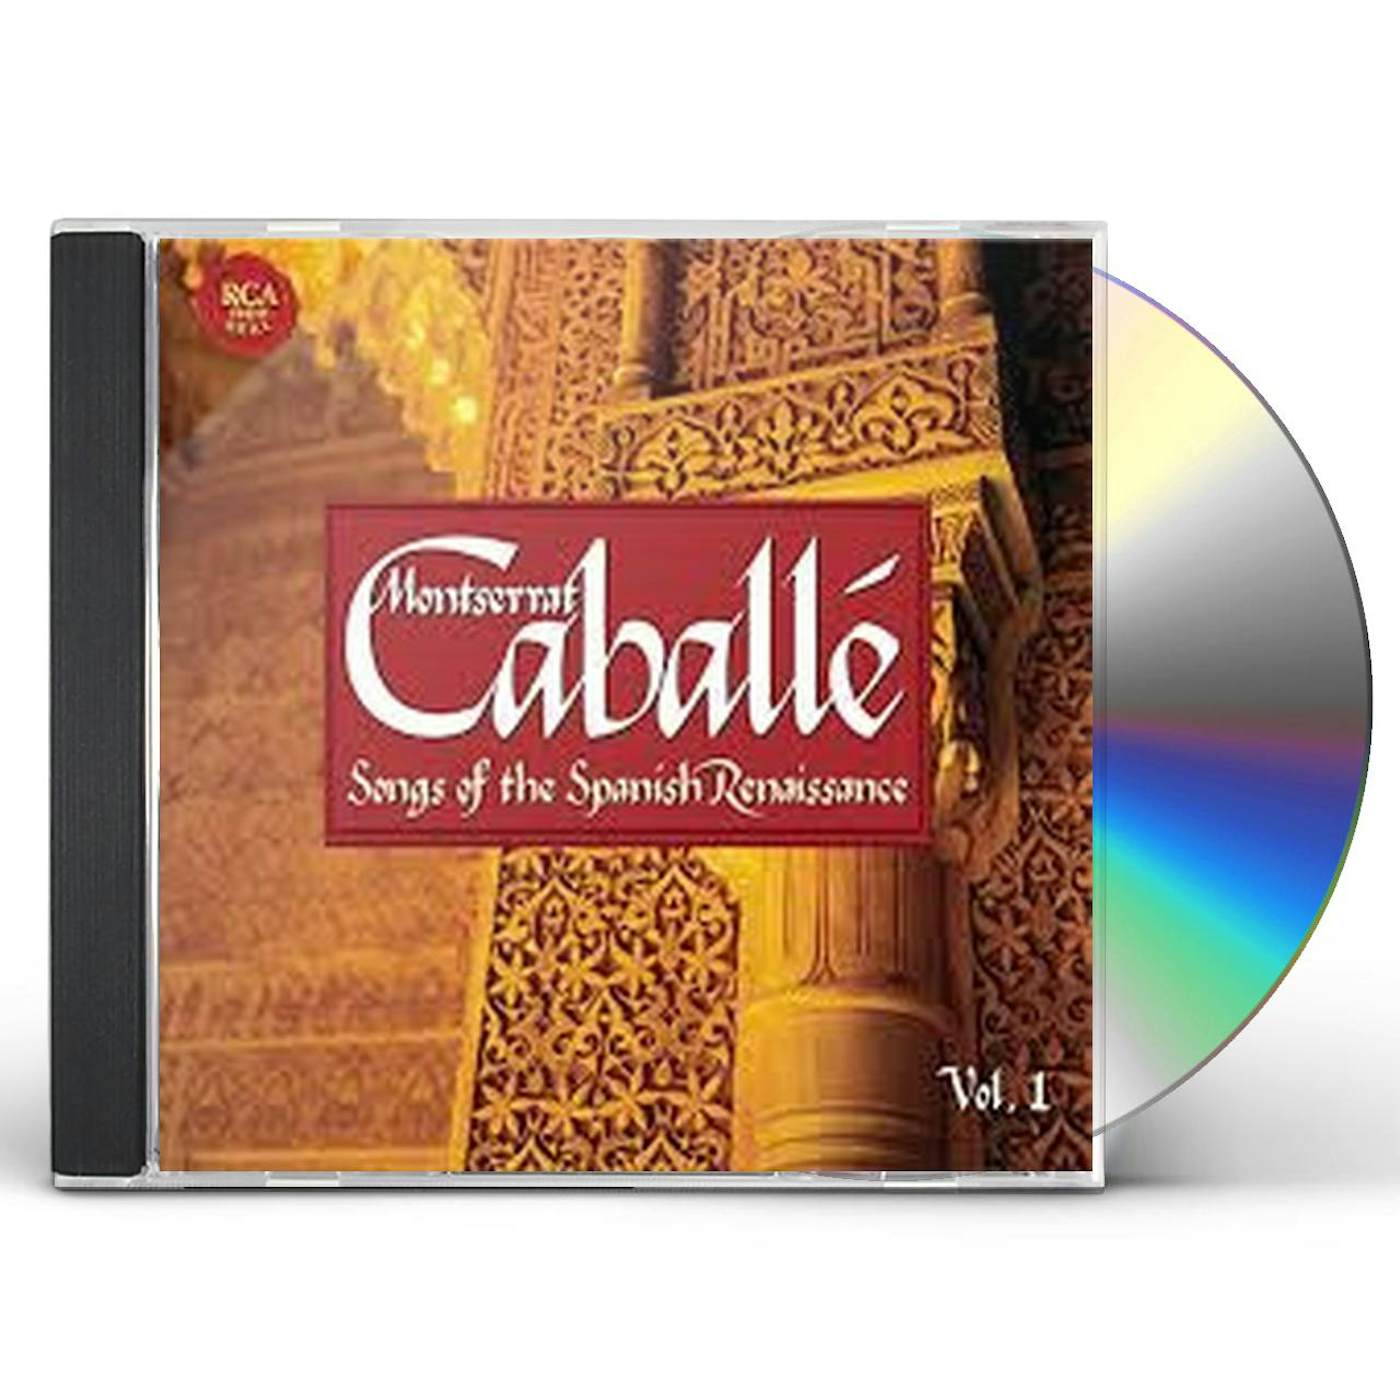 Montserrat Caballé SONGS OF THE SPANISH RENAISSANCE 1 CD